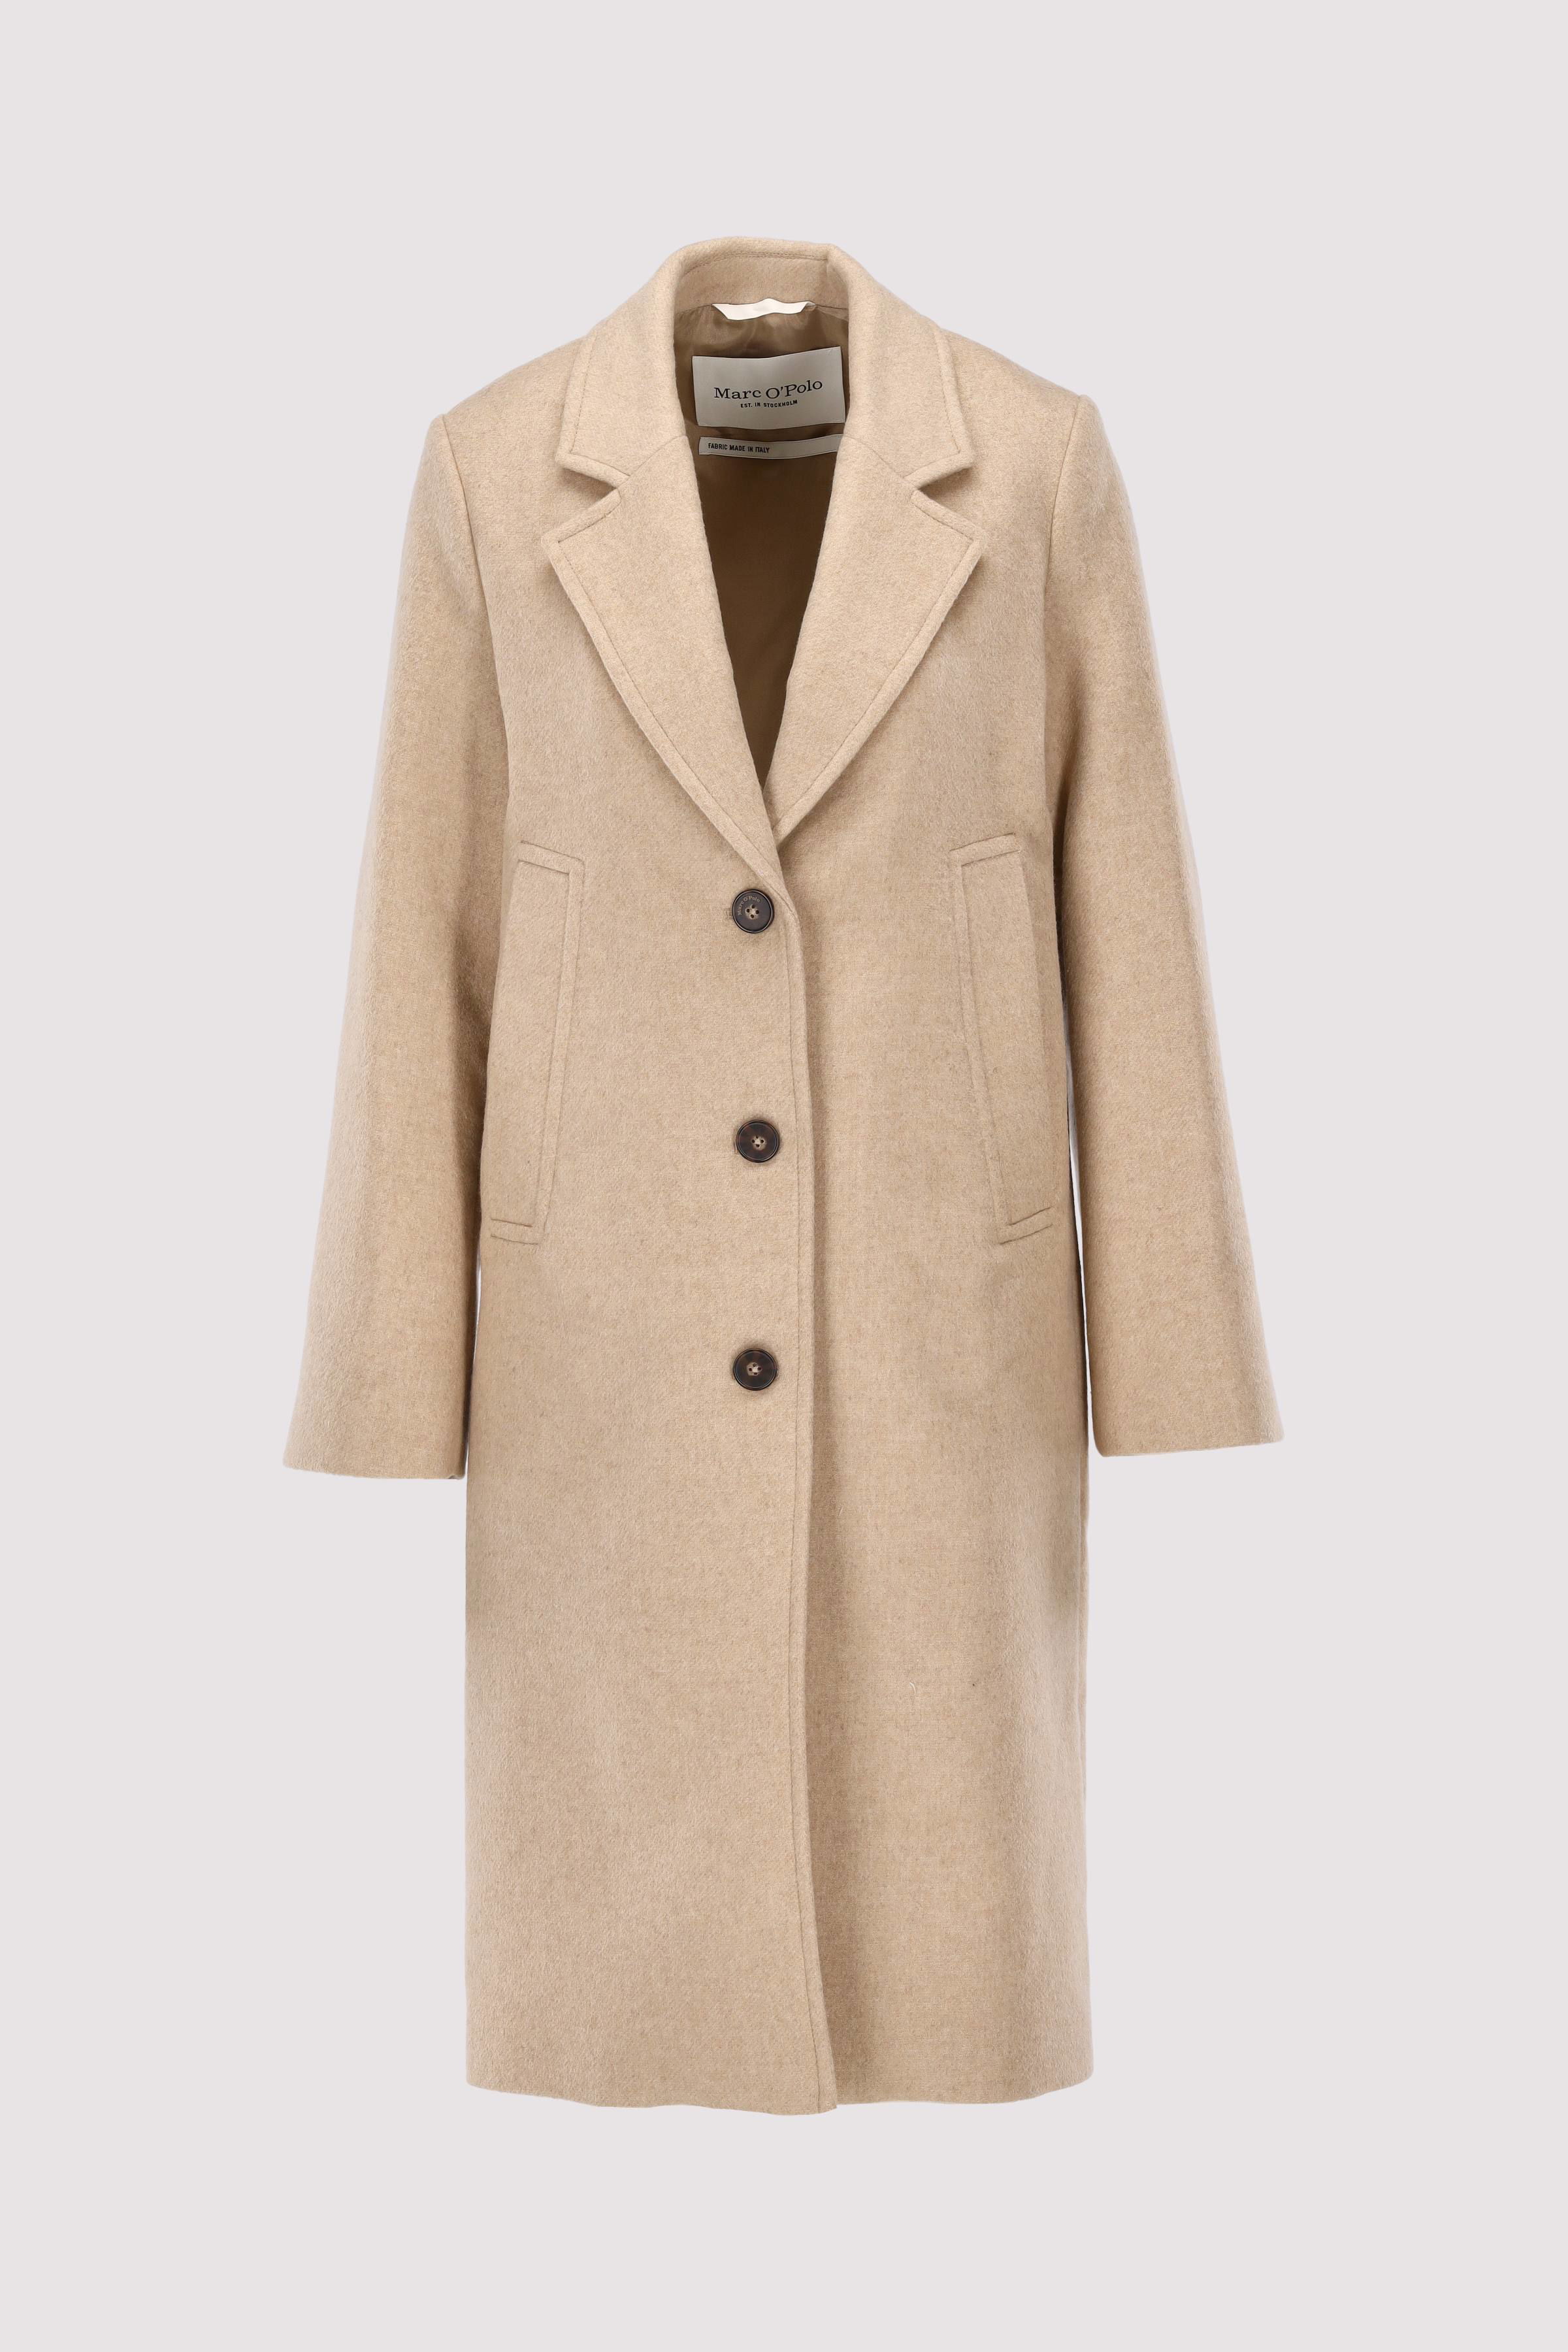 Wool coat, lapel collar, singl